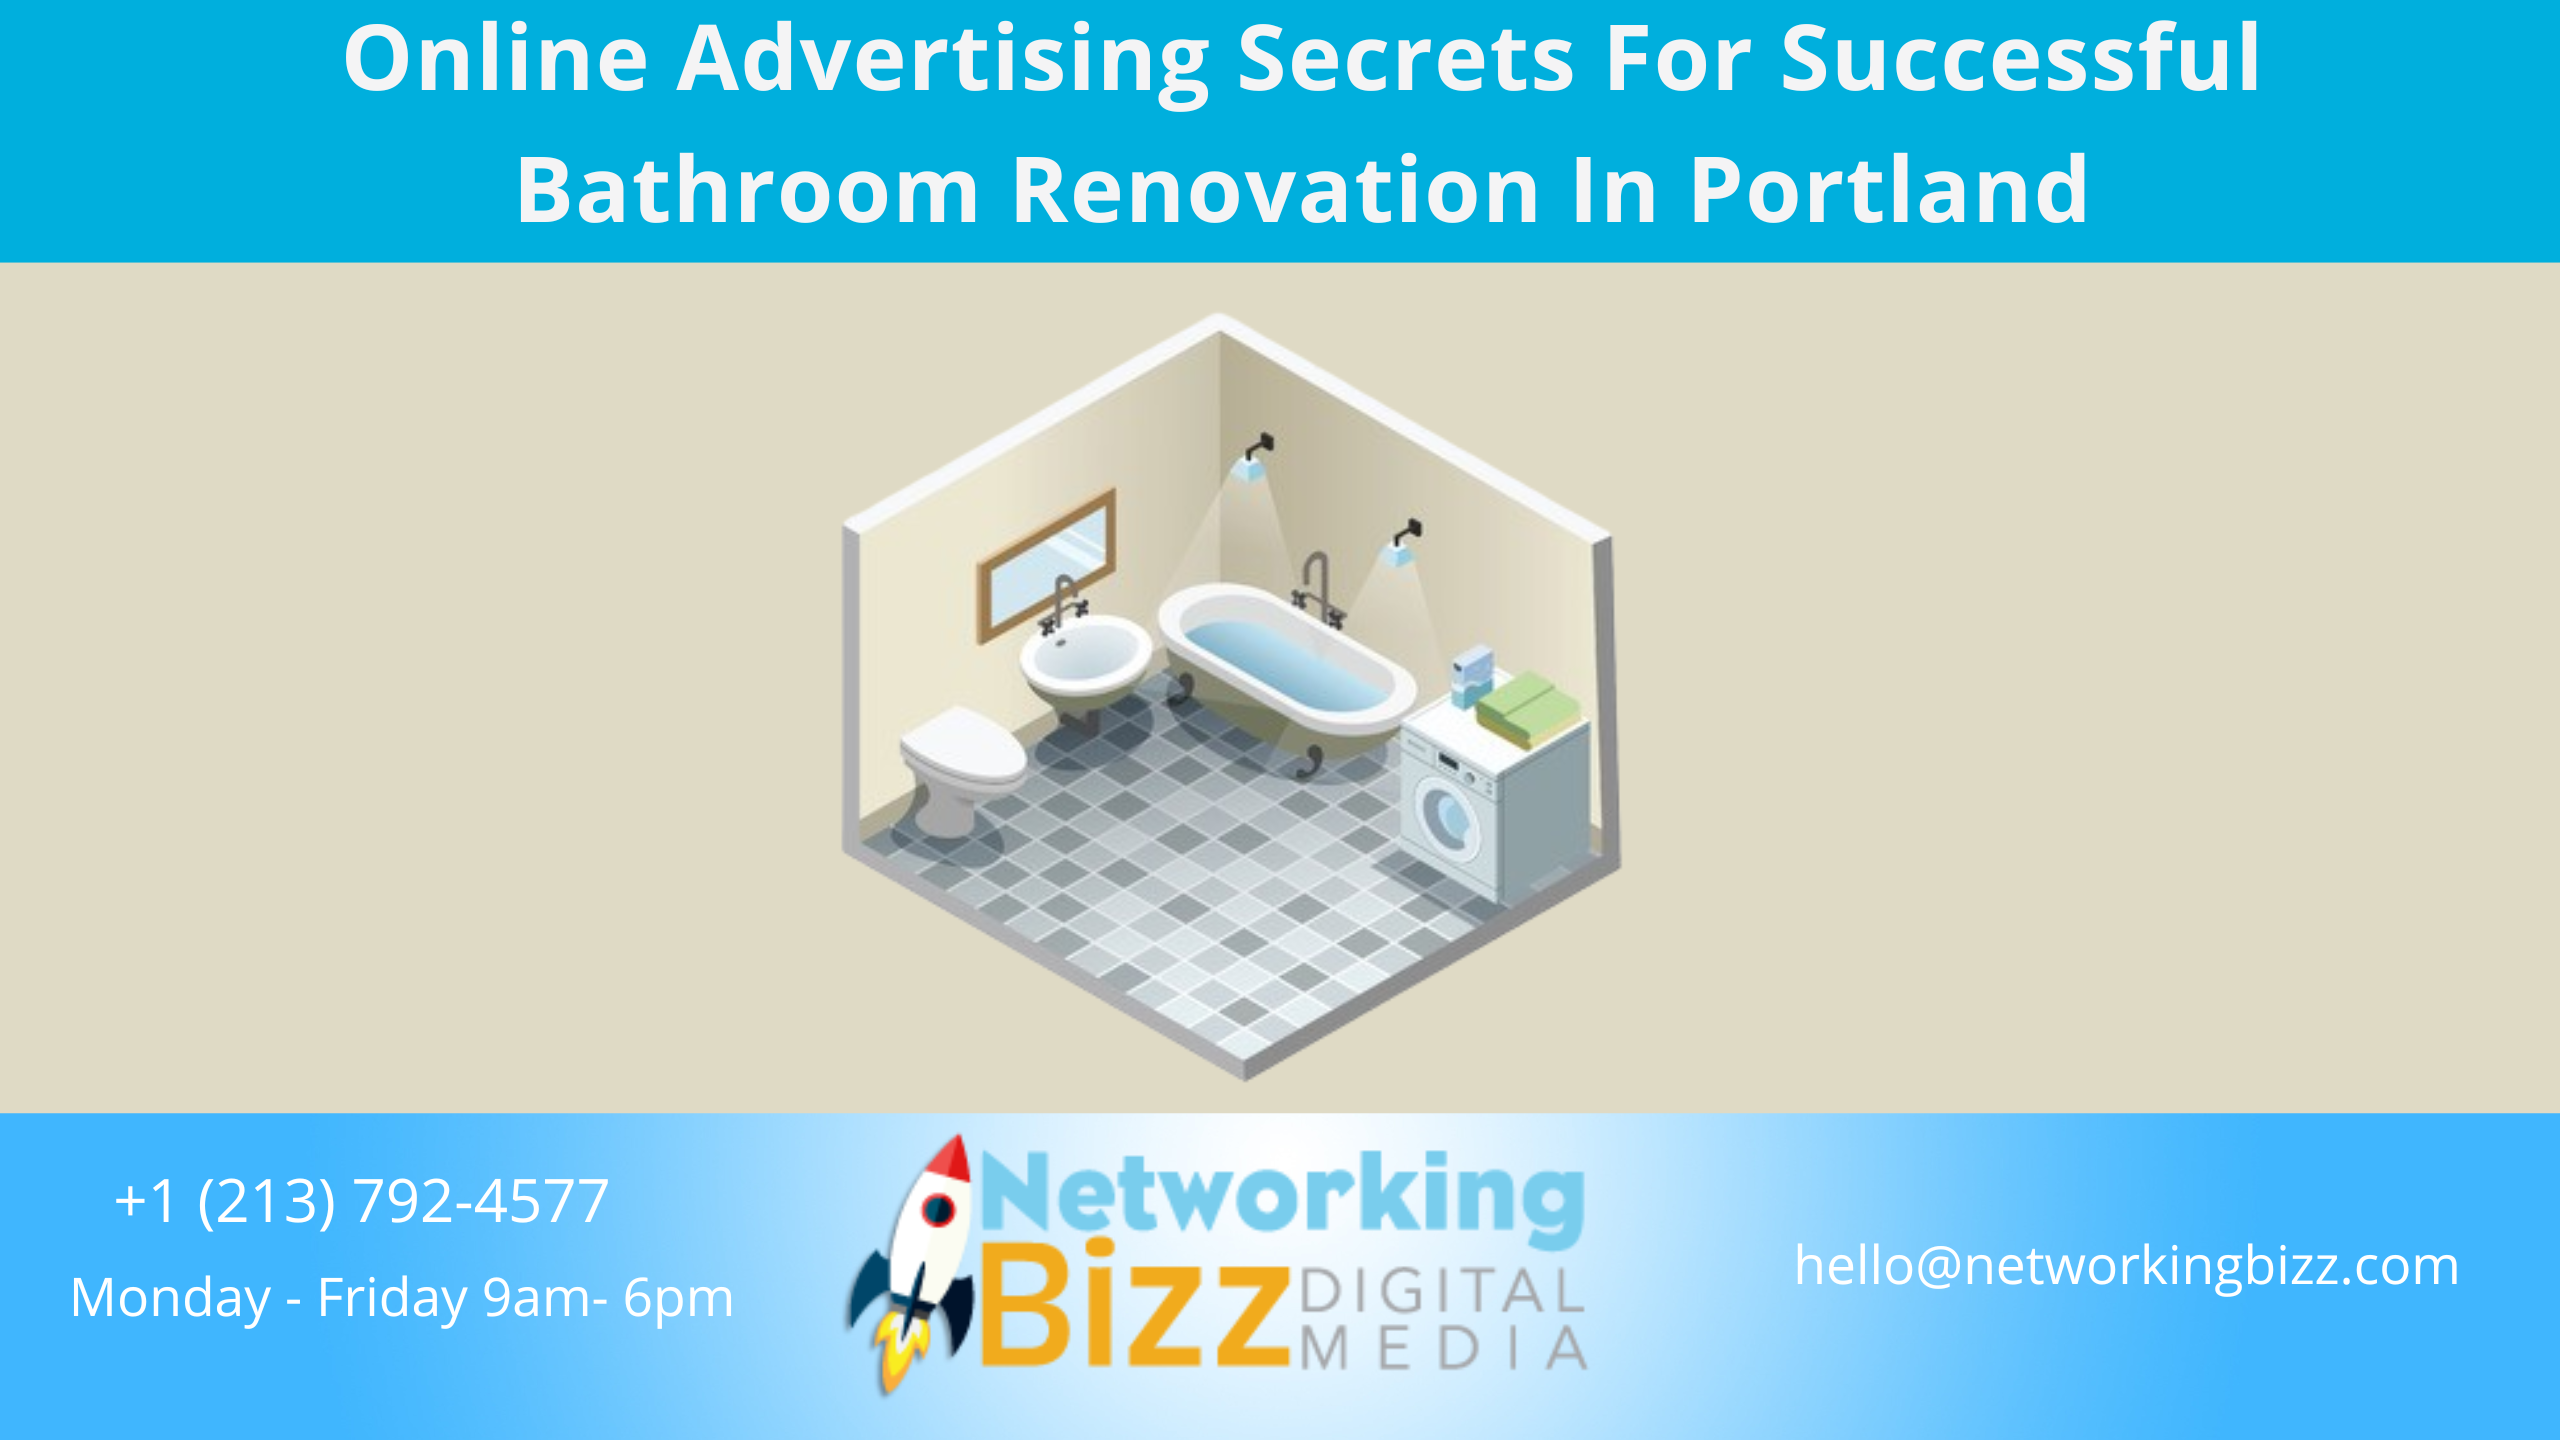 Online Advertising Secrets For Successful Bathroom Renovation In Portland 